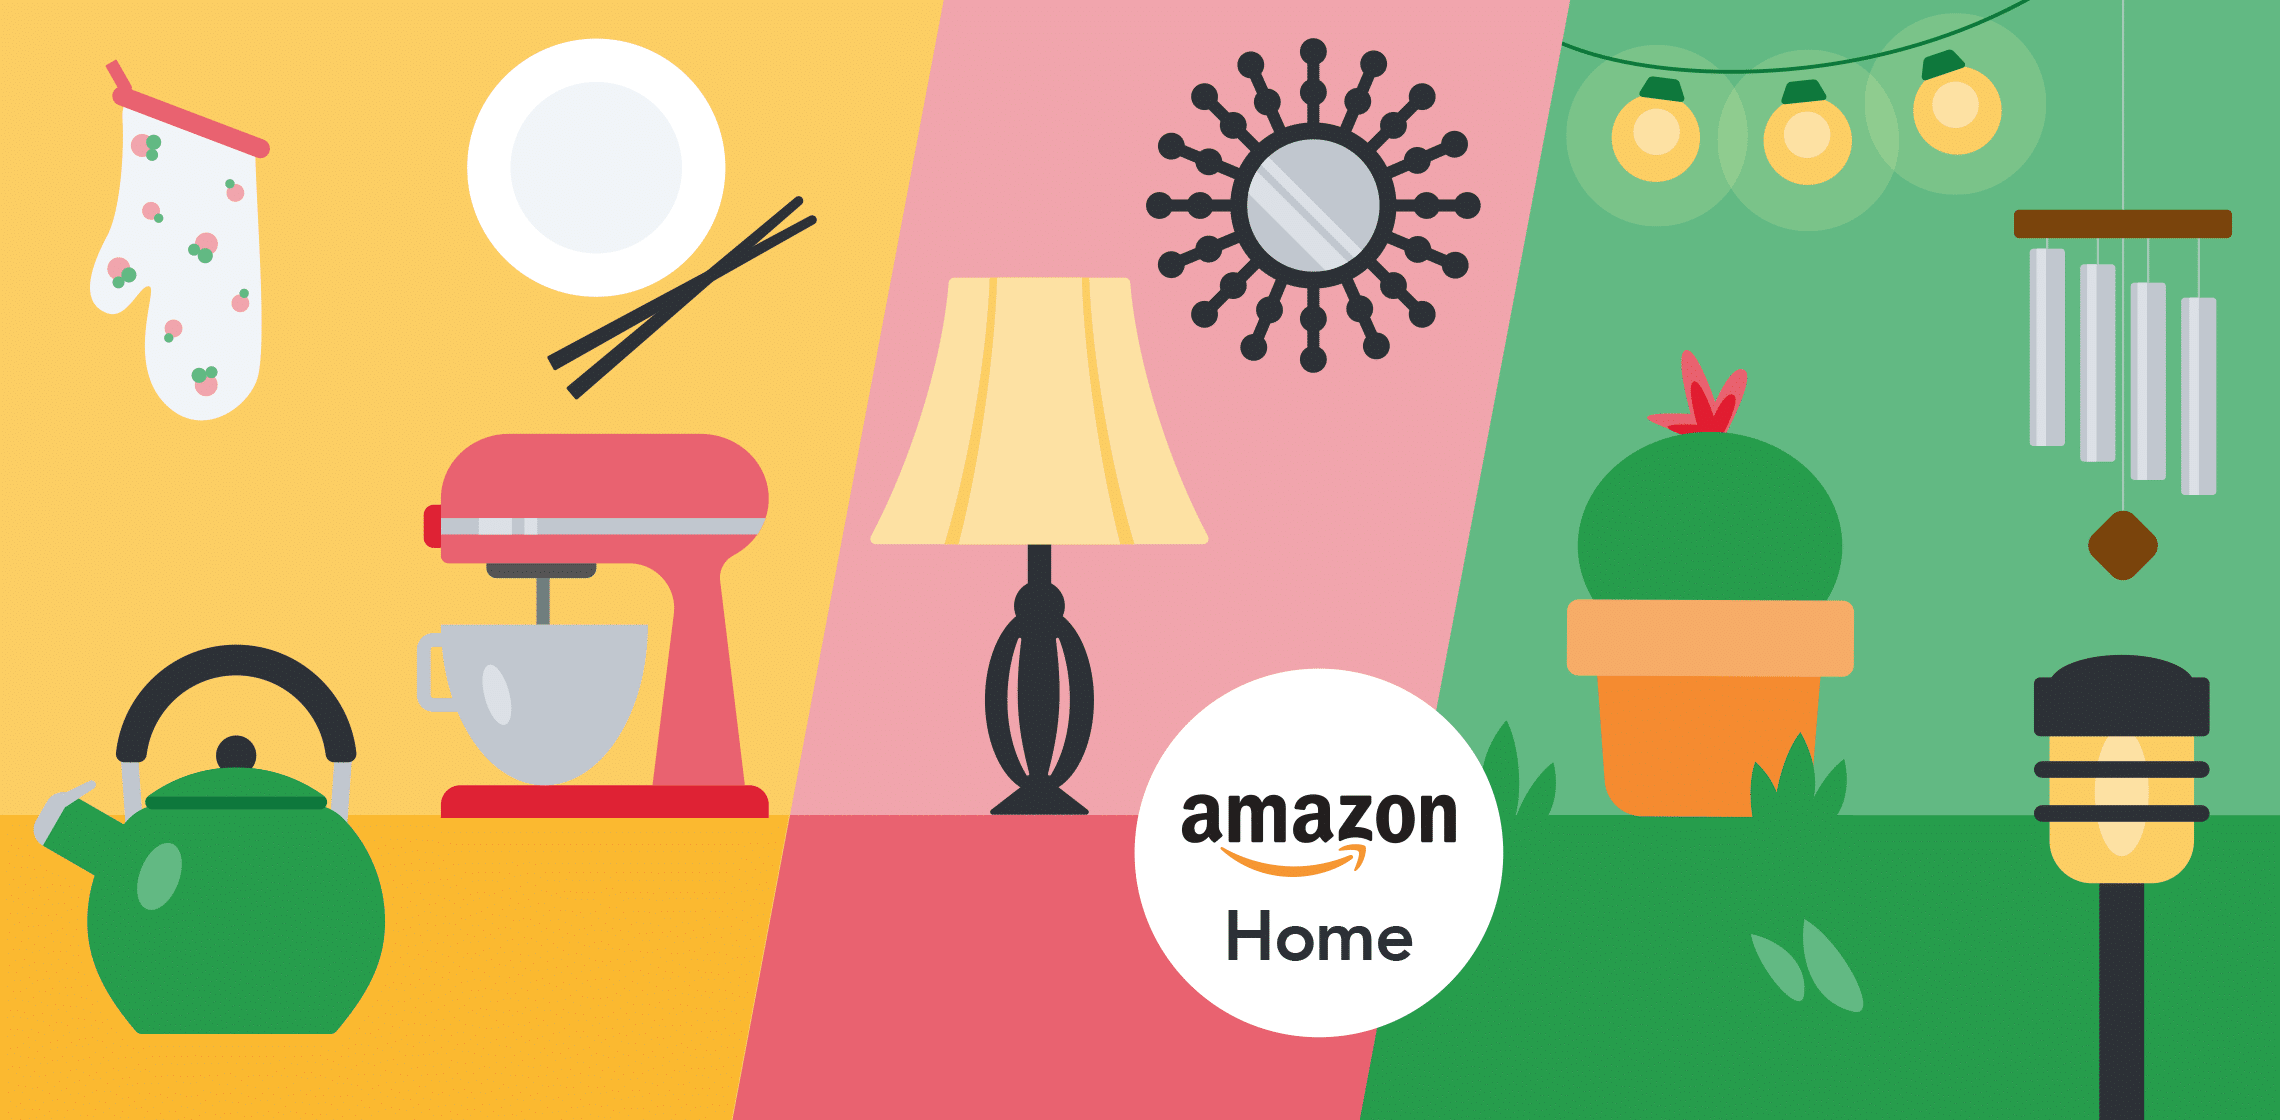 Amazon Home is now on Shopkick!